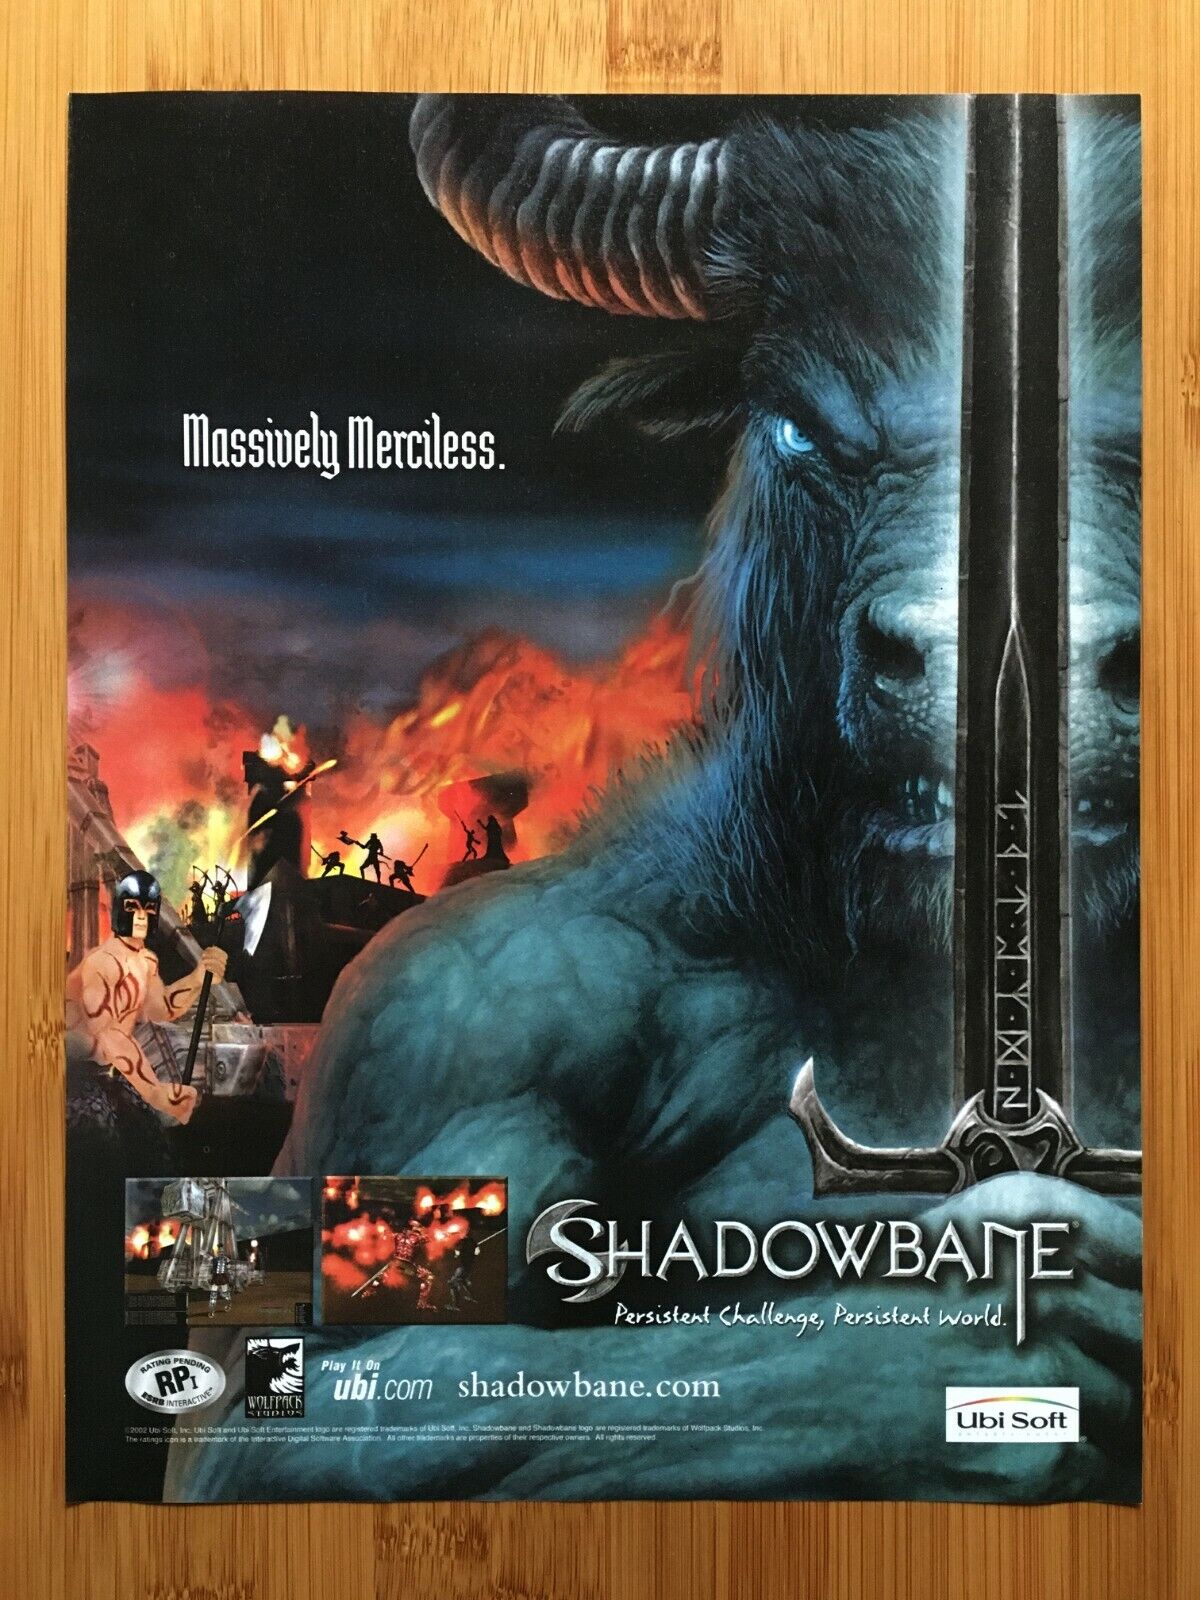 Shadowbane PC 2003 Vintage Game Print Ad/Poster Official Big Box Promo Art Rare